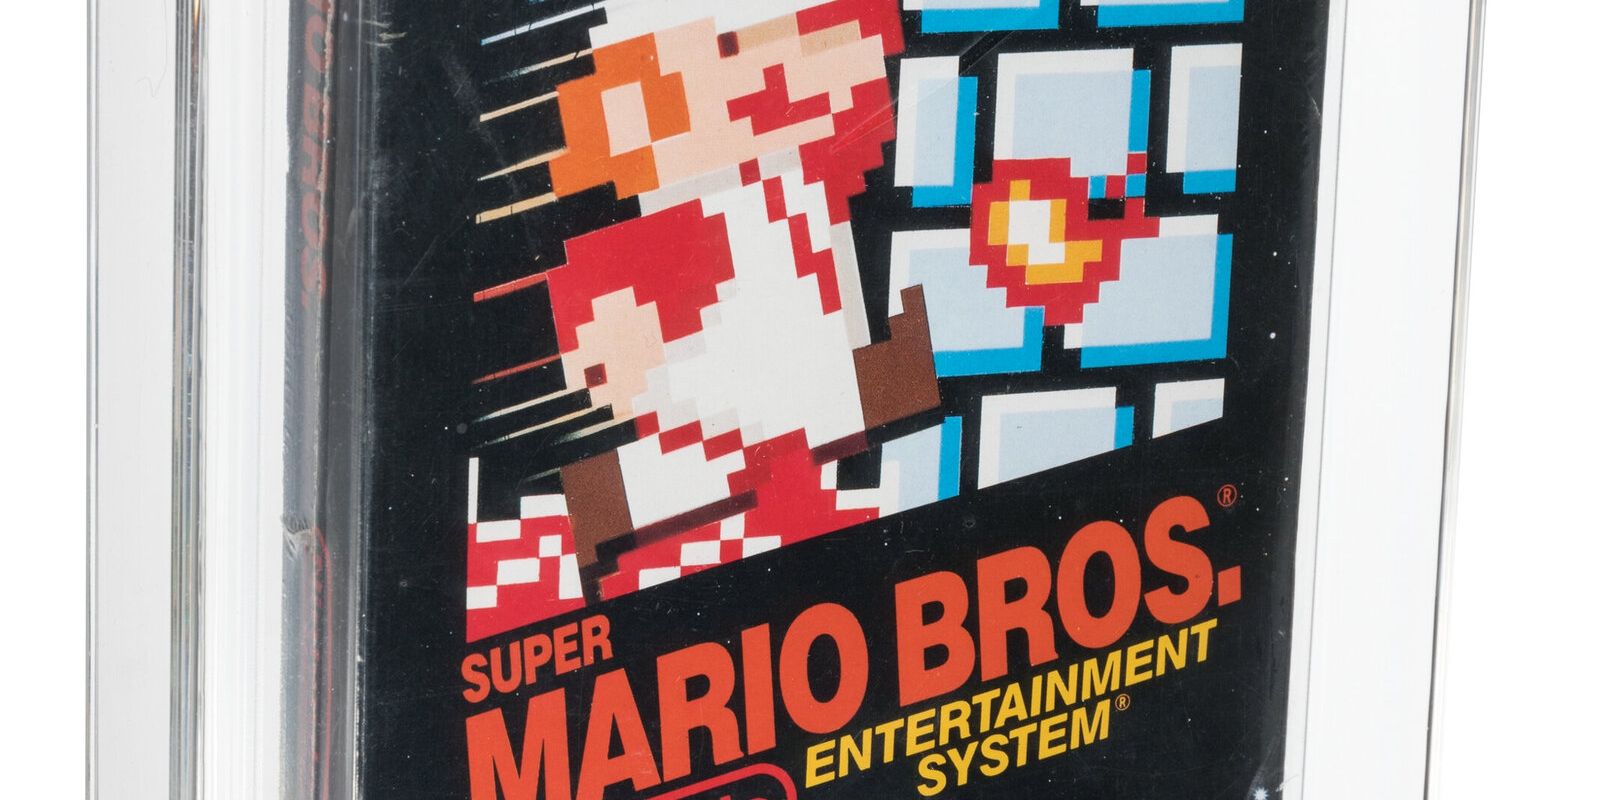 The case for Super Mario Bros